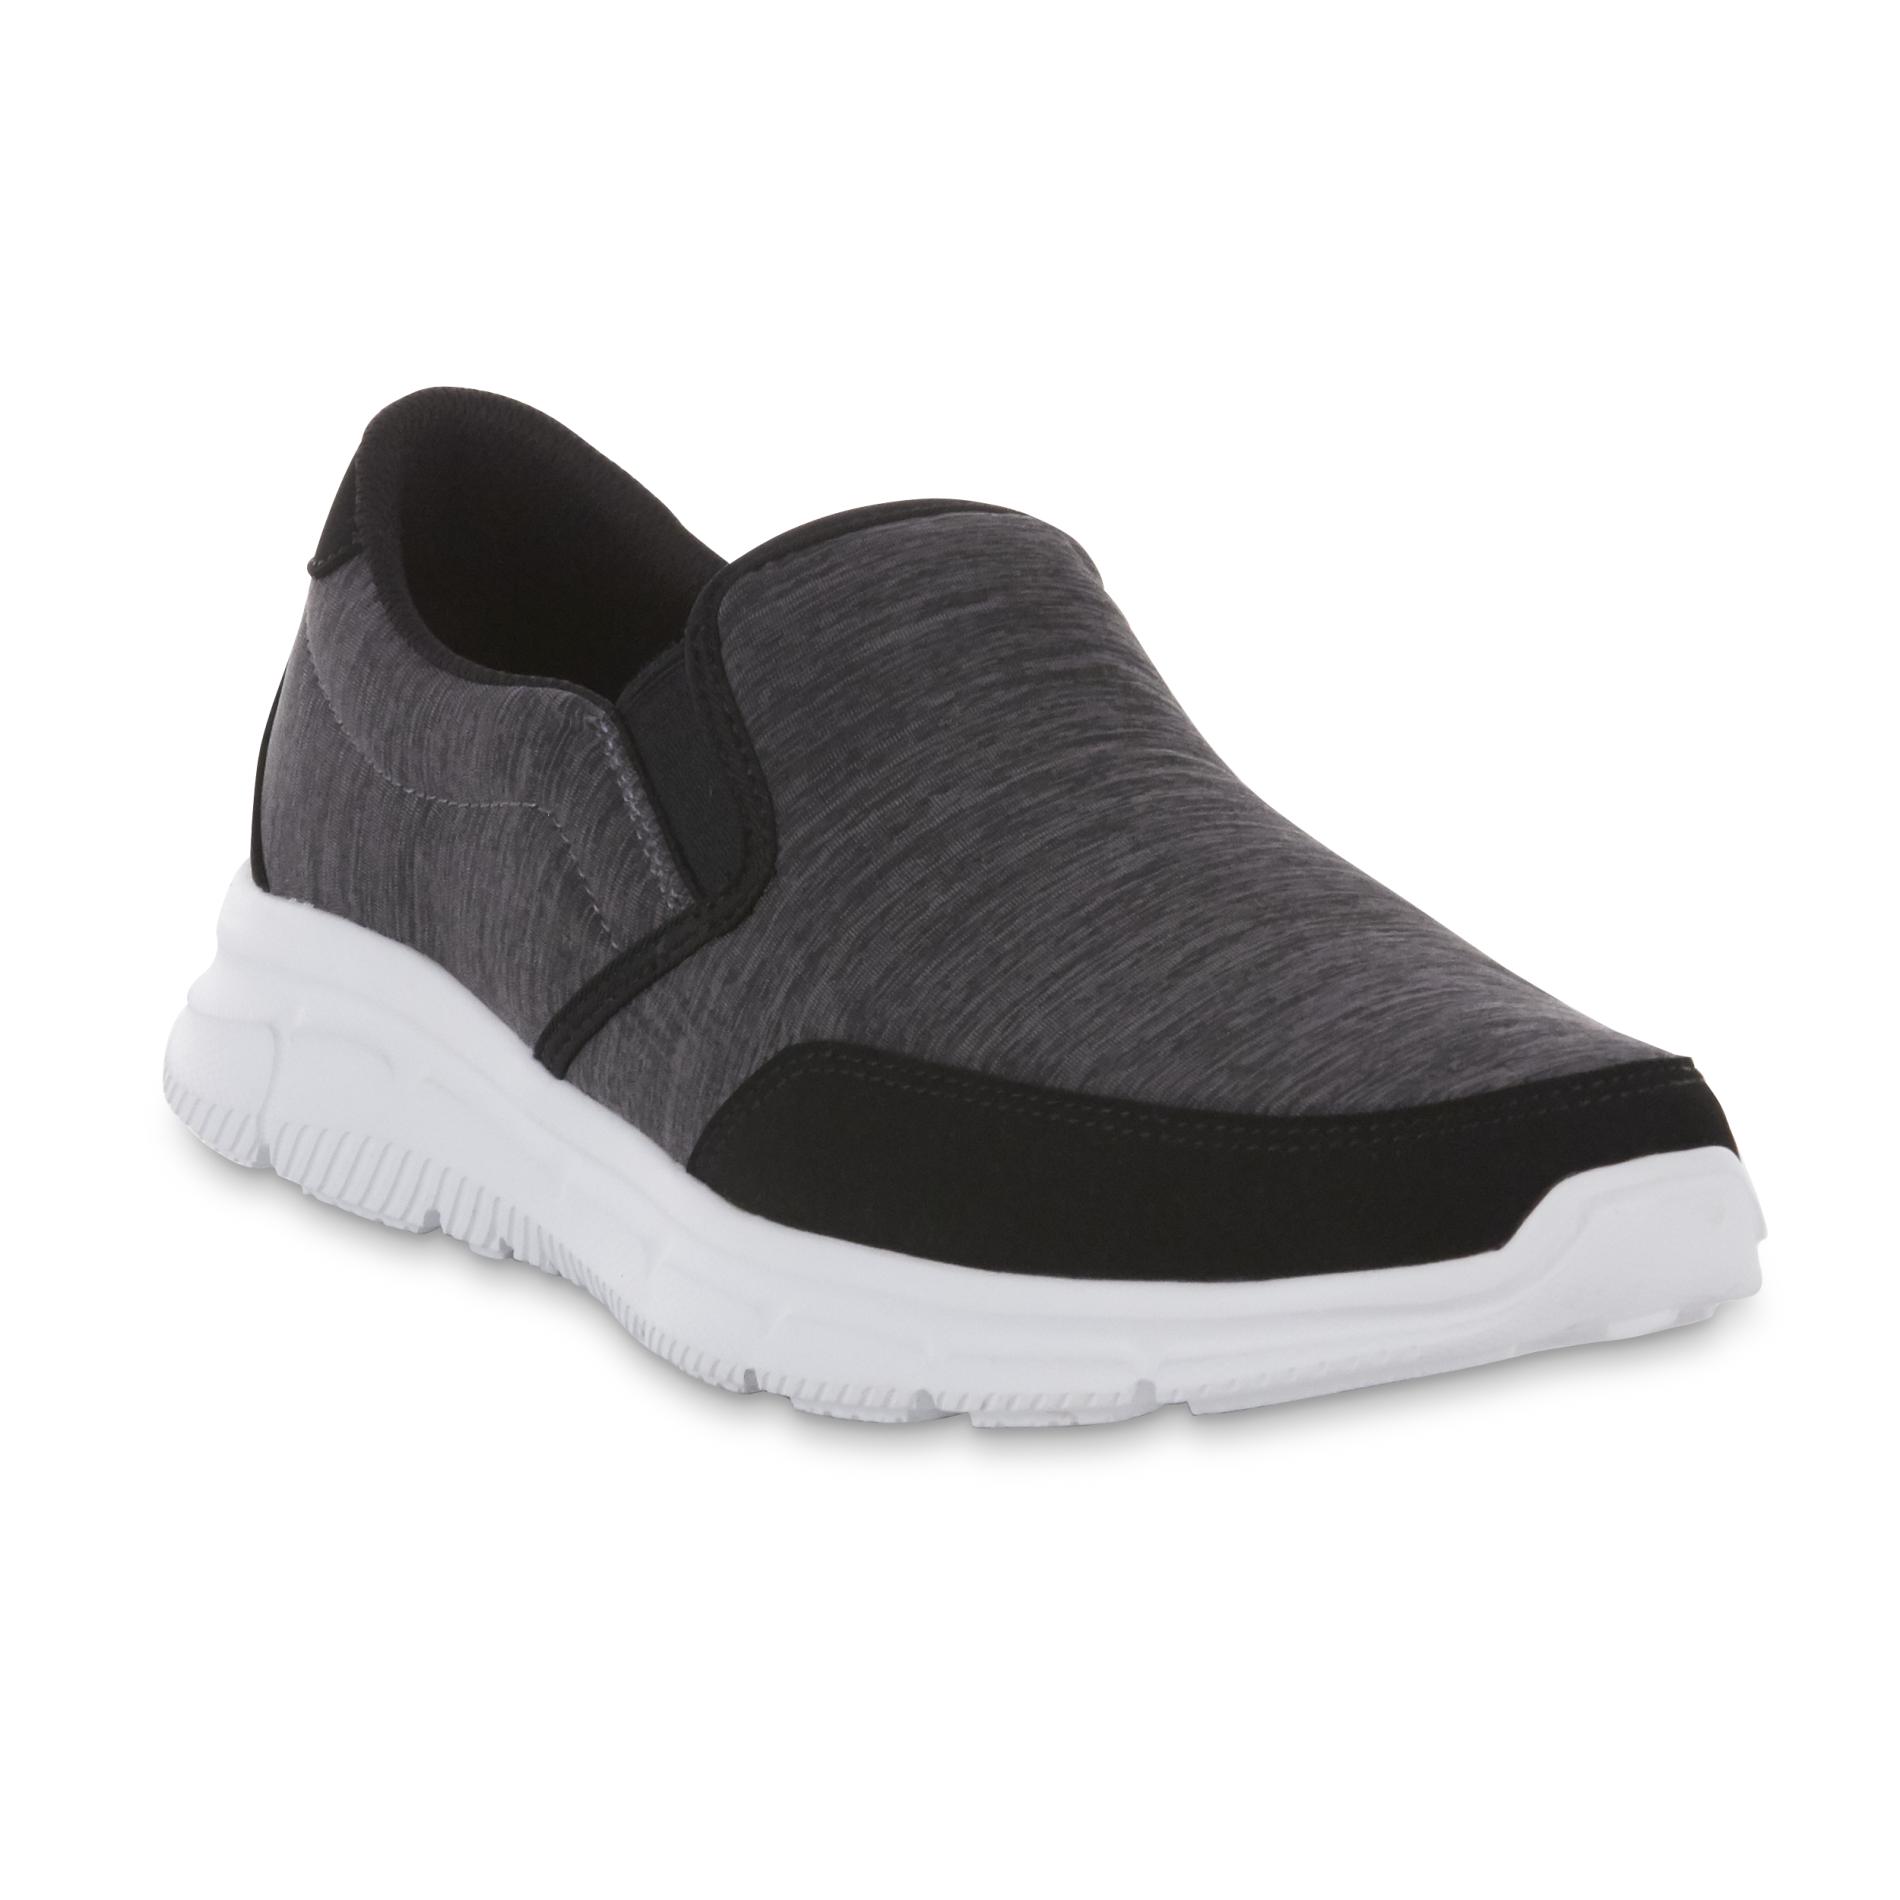 Everlast® Sport Men's Satisfaction 2 Slip-On Sneaker - Black/Grey